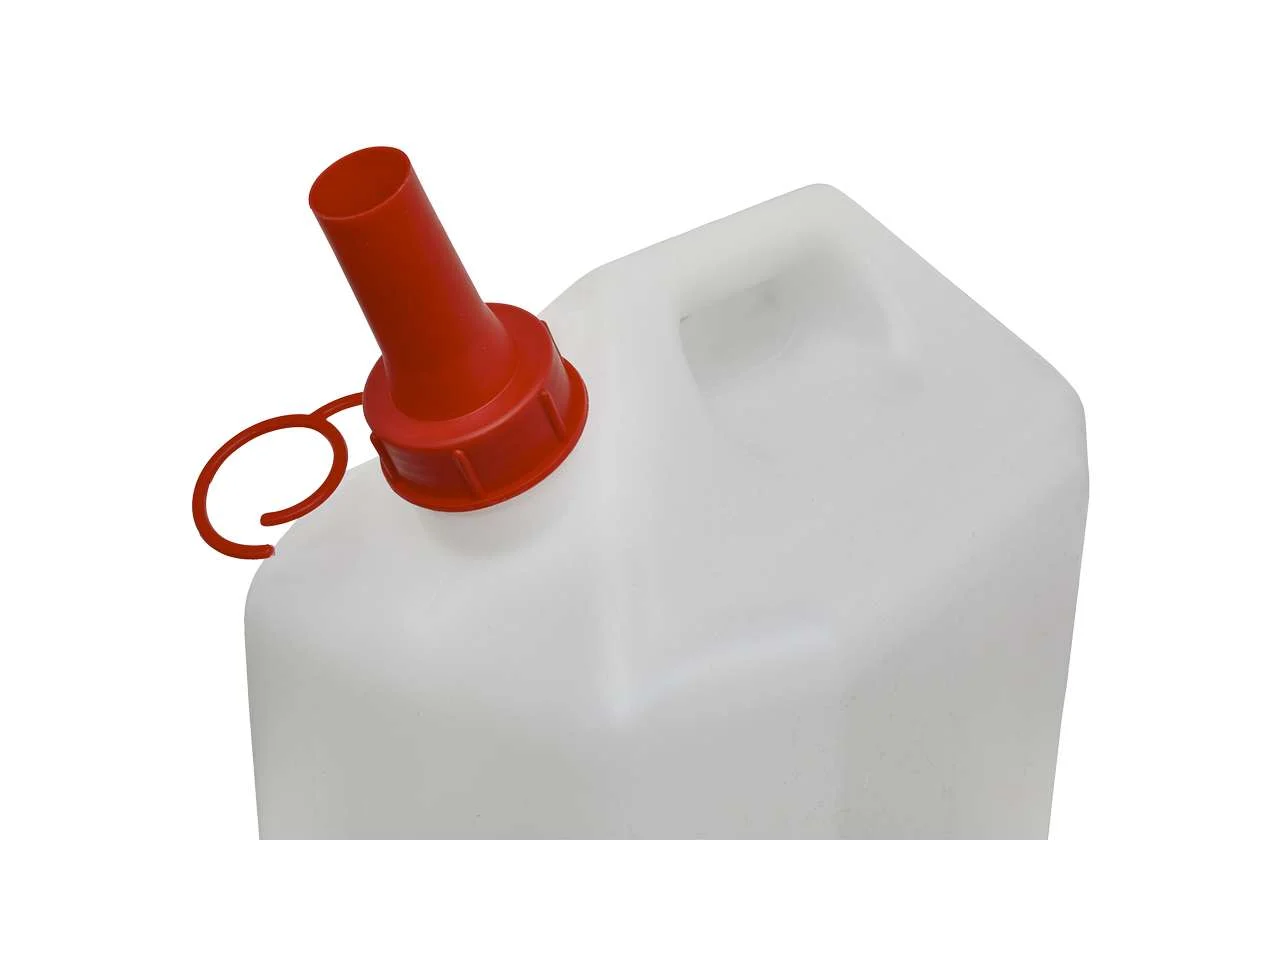 Robinet smoth-flow pour bidon container 5 litres